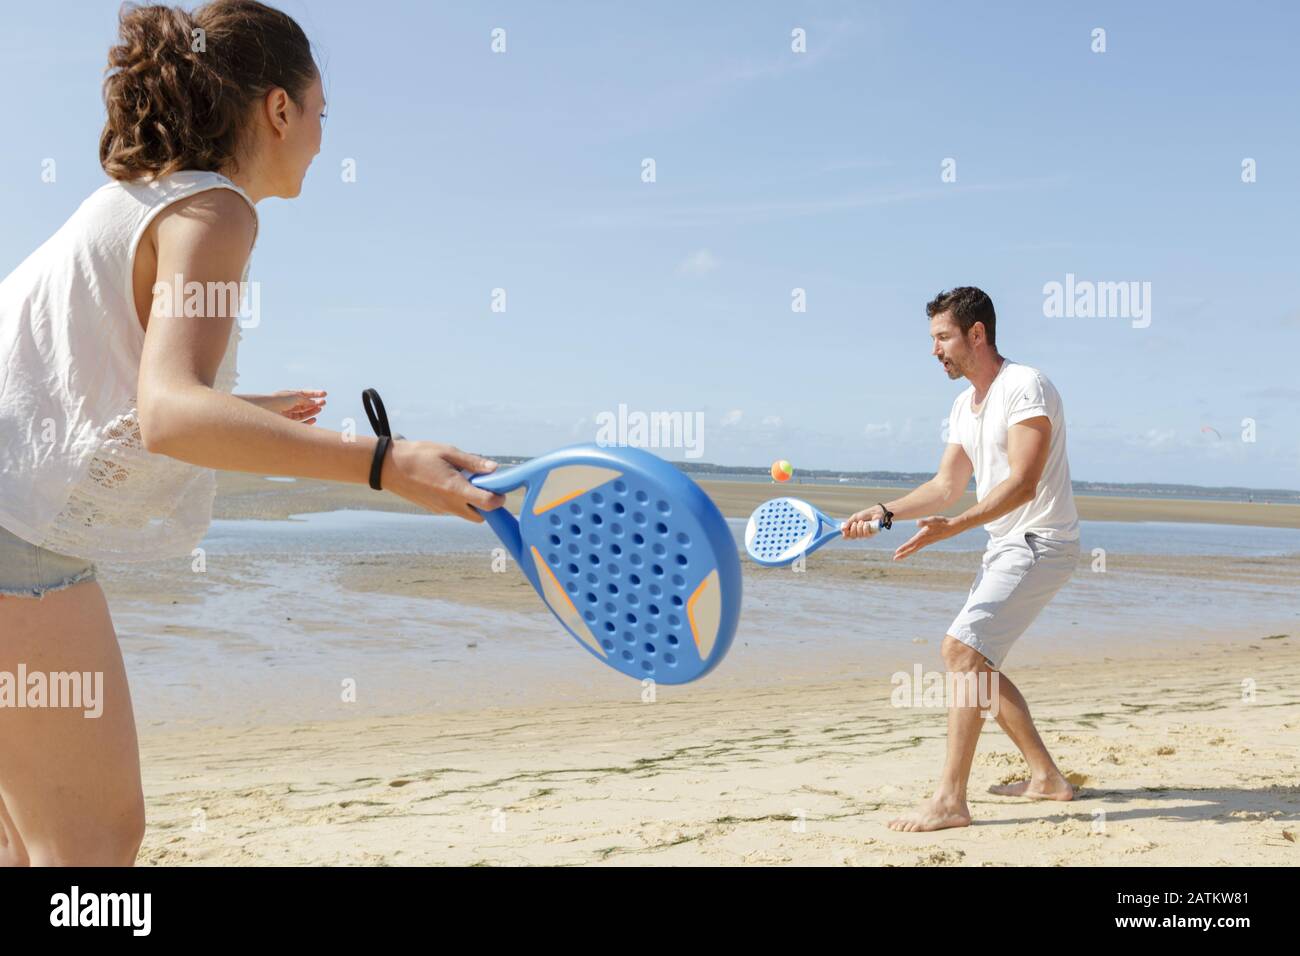 How to Play Beach Tennis? 